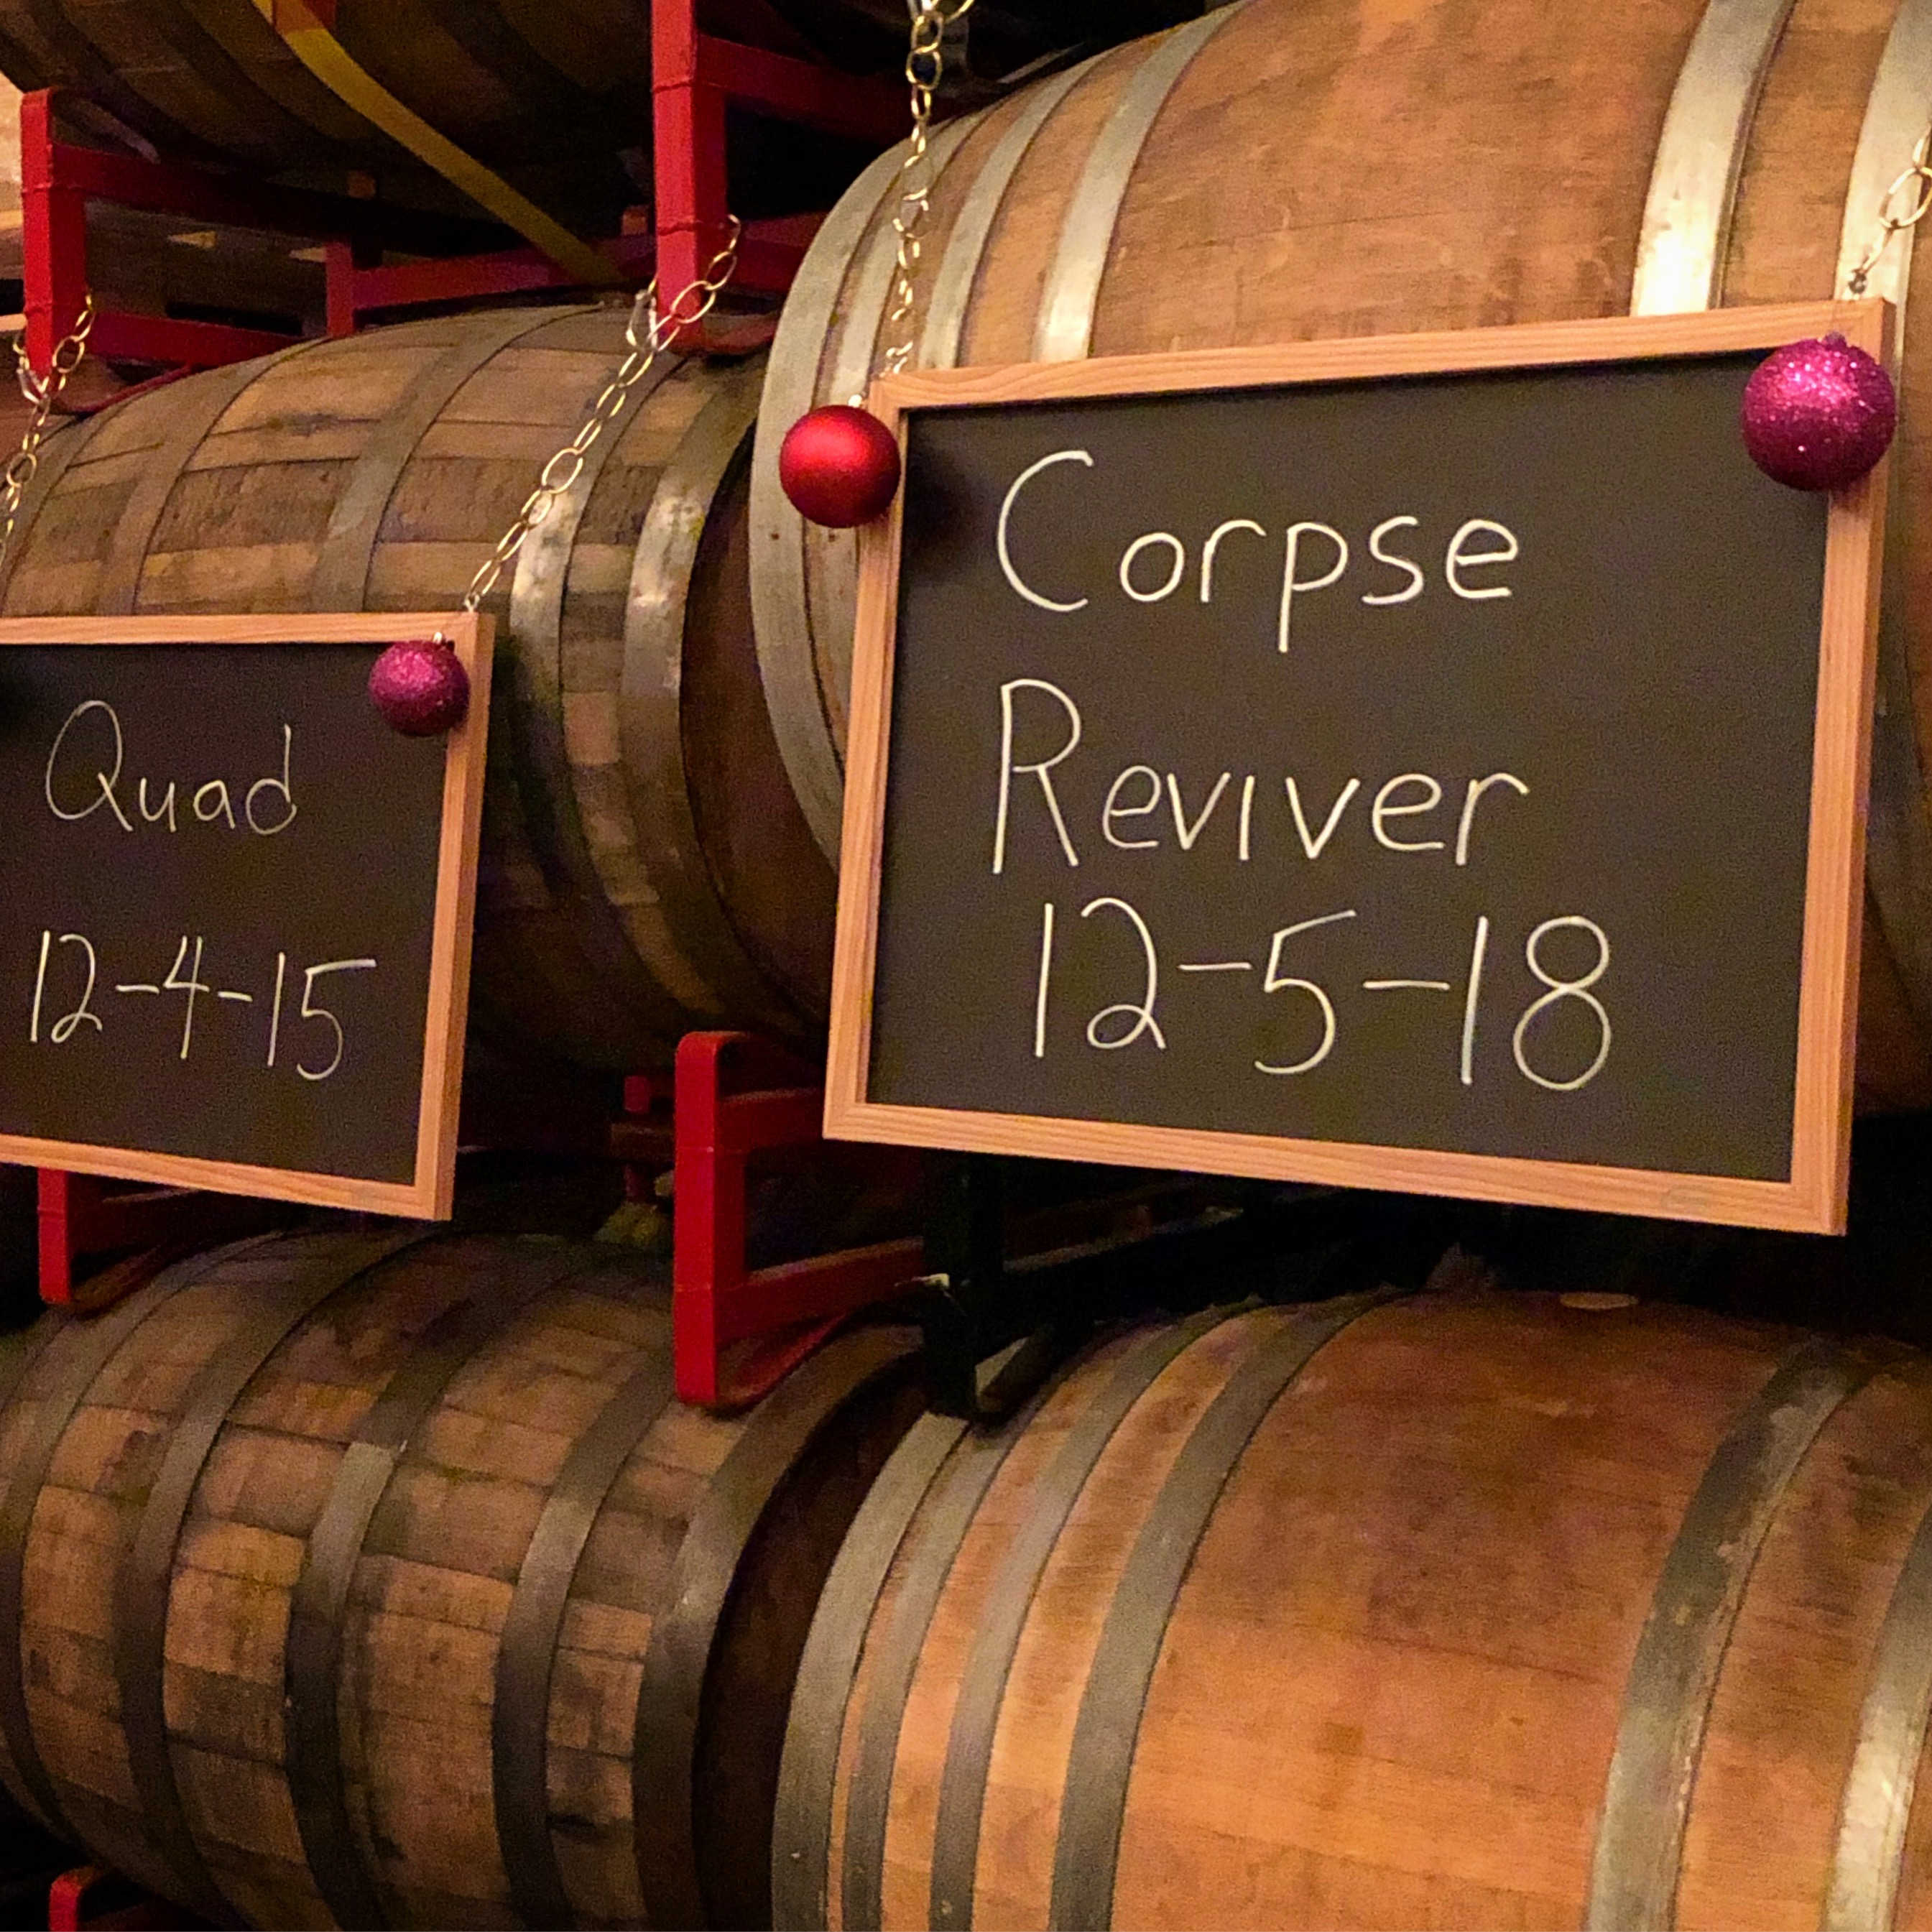 Corpse Reviver resting in barrels inside the barrel room at Gigantic Brewing.